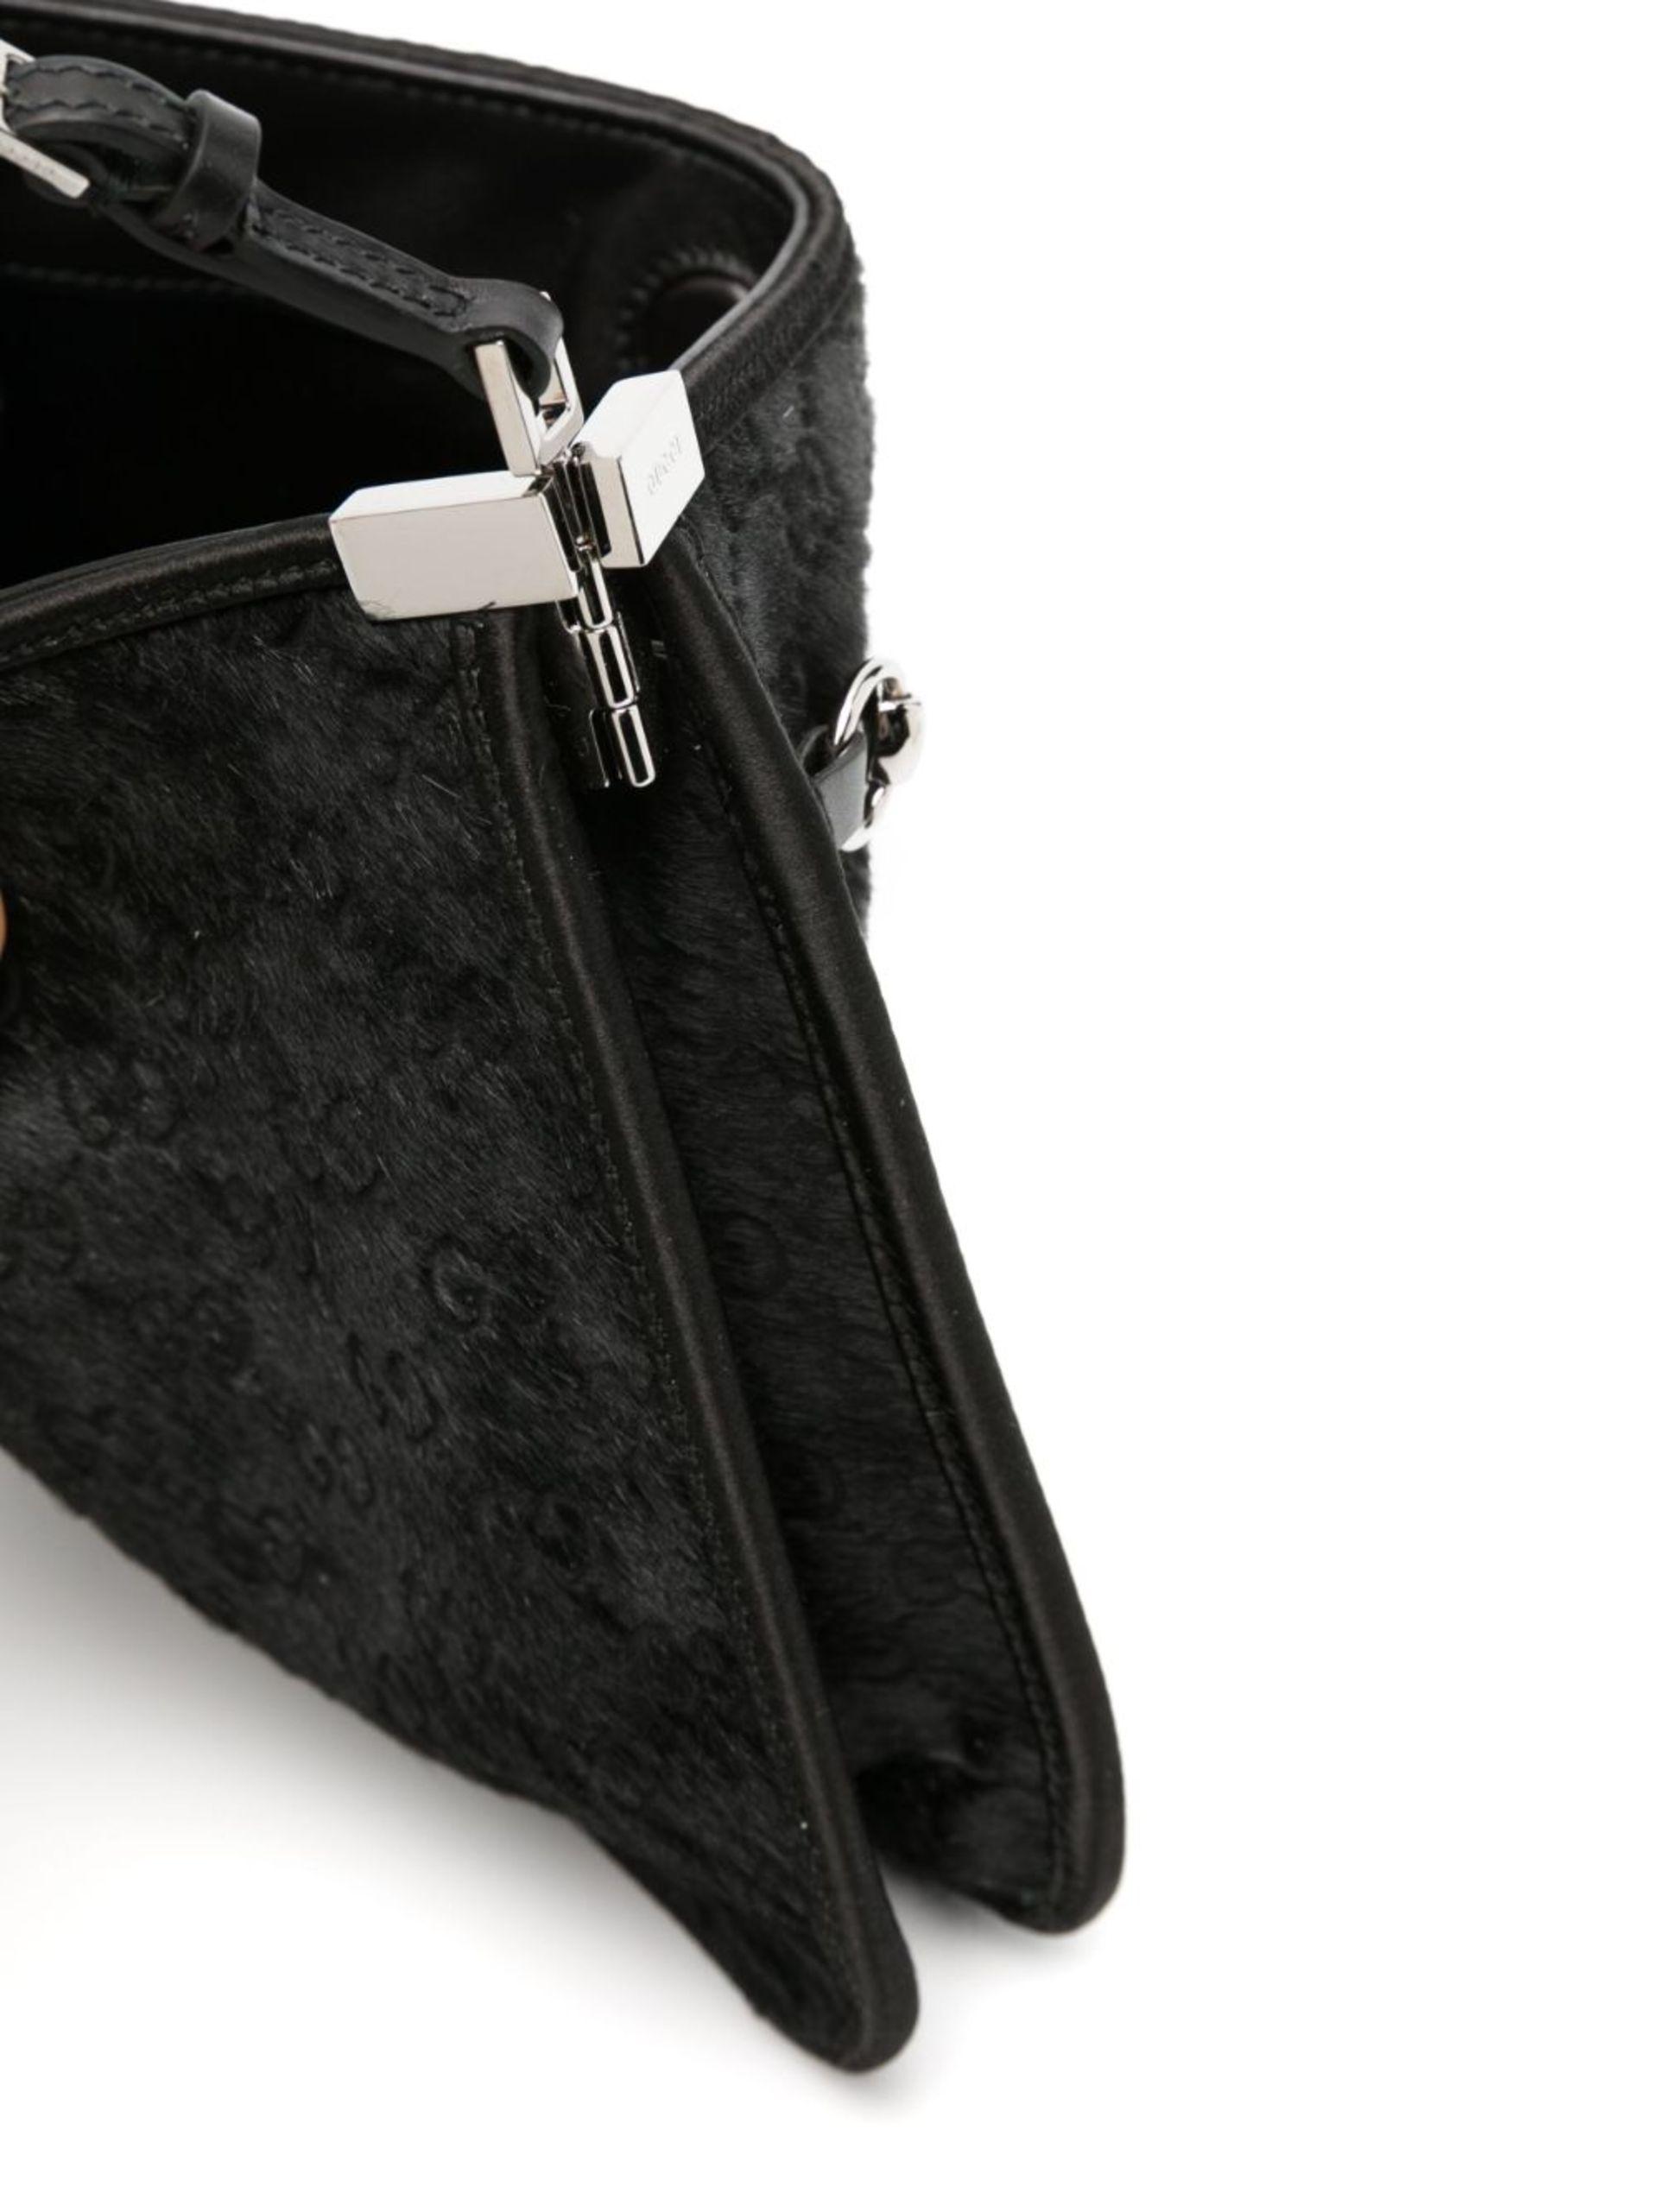 Horsebit Medium GG Calf Hair Shoulder Bag in Black - Gucci